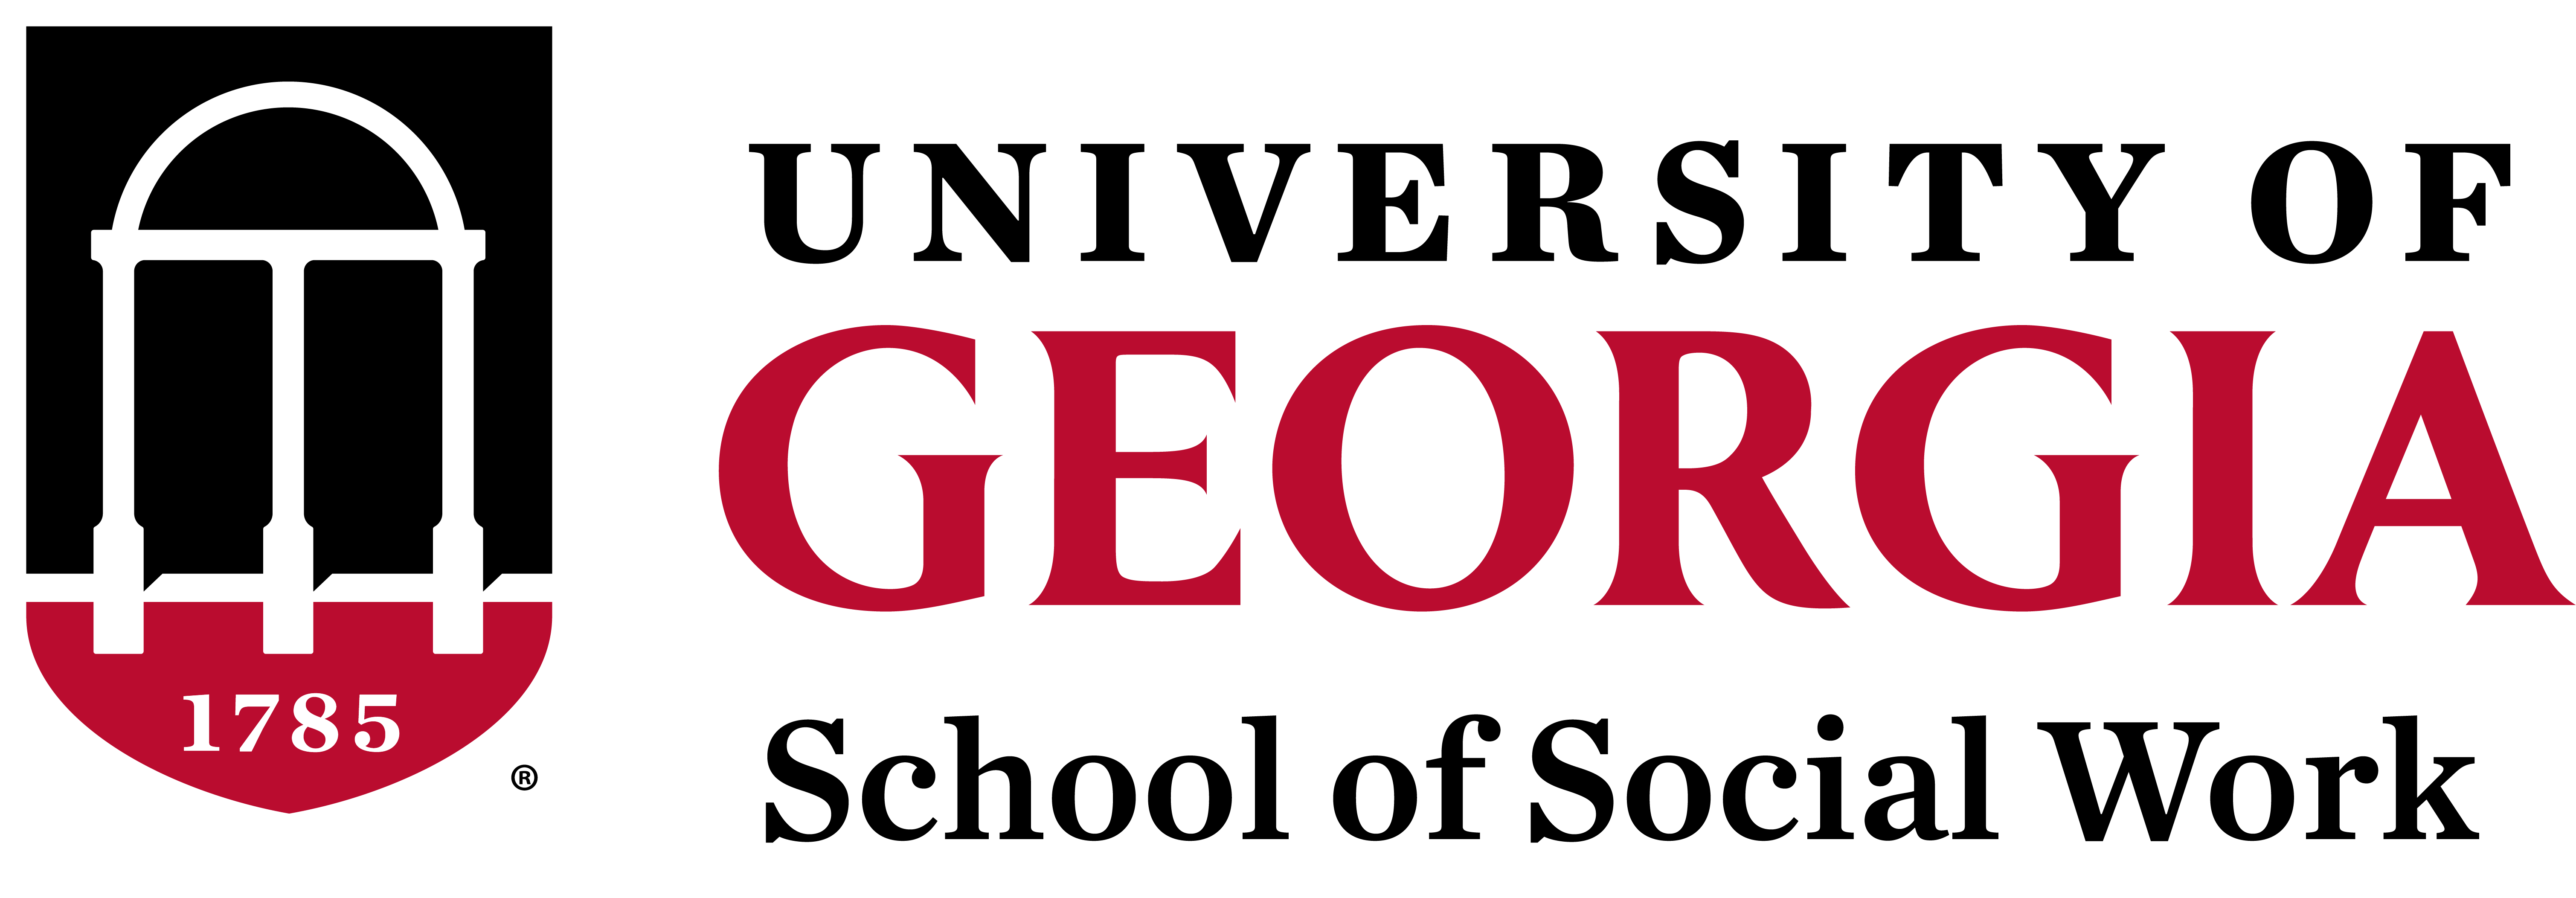 University of Georgia School of Social Work